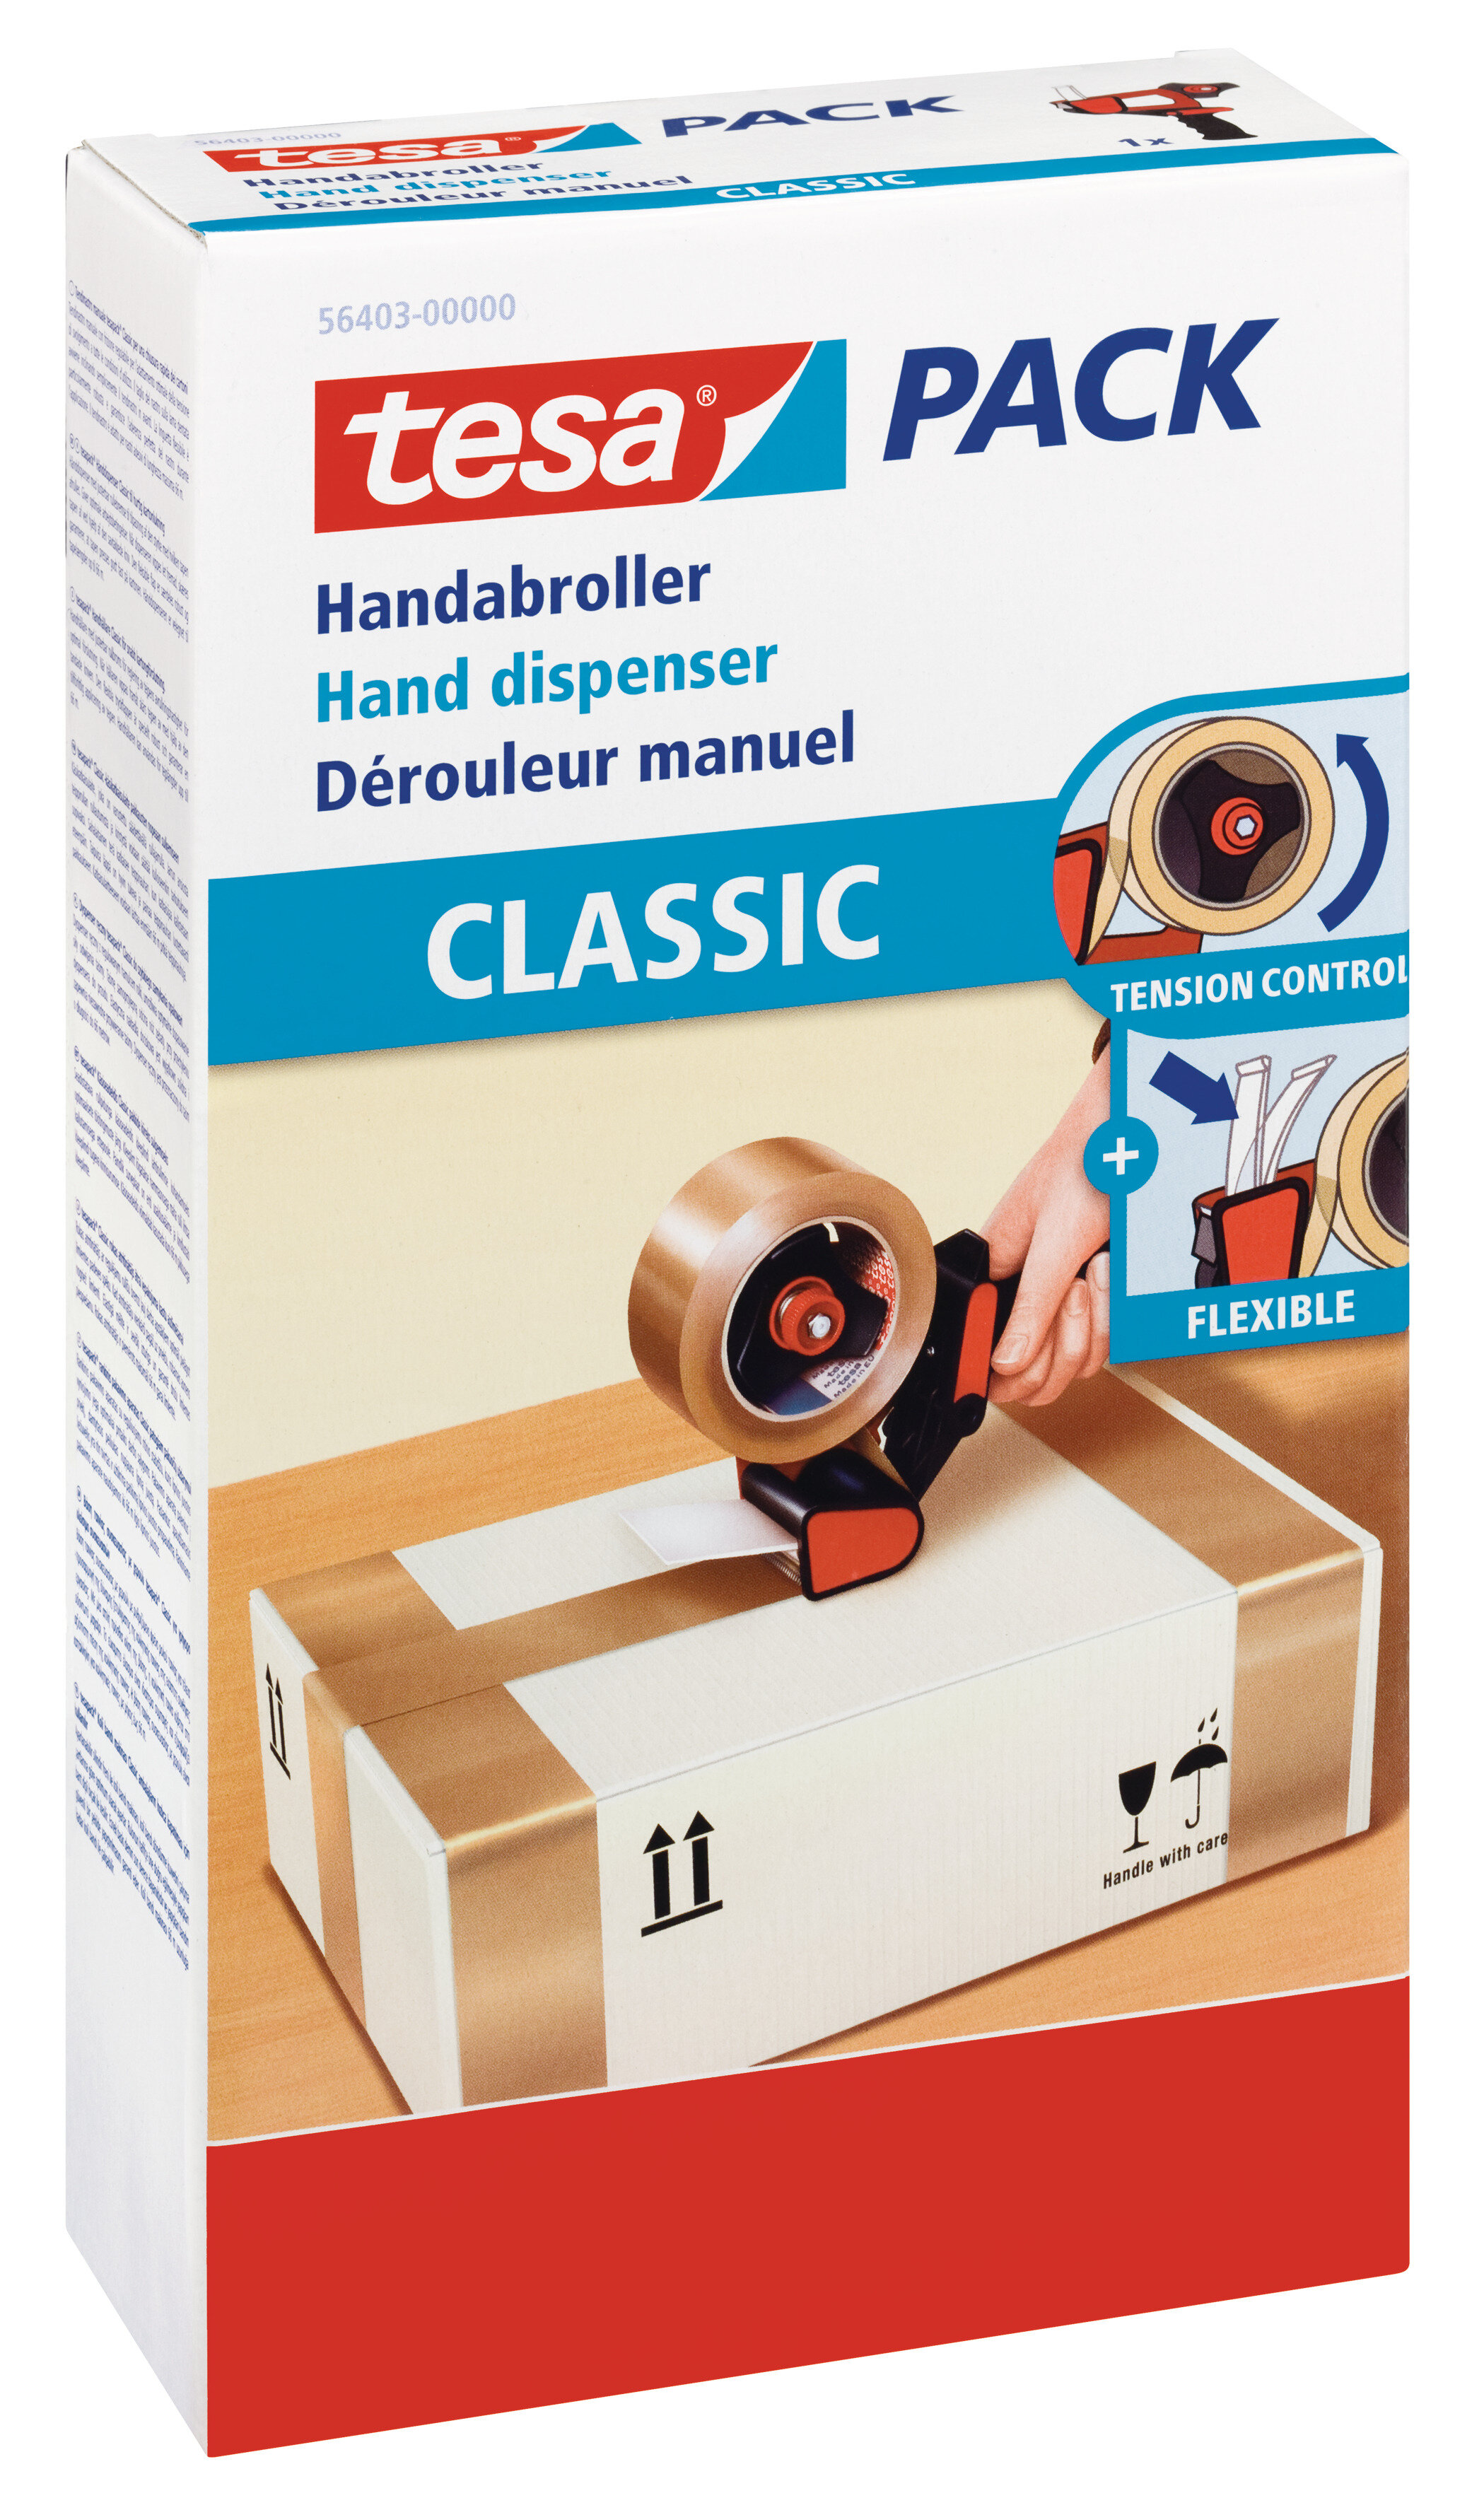 CLASSIC Handabroller